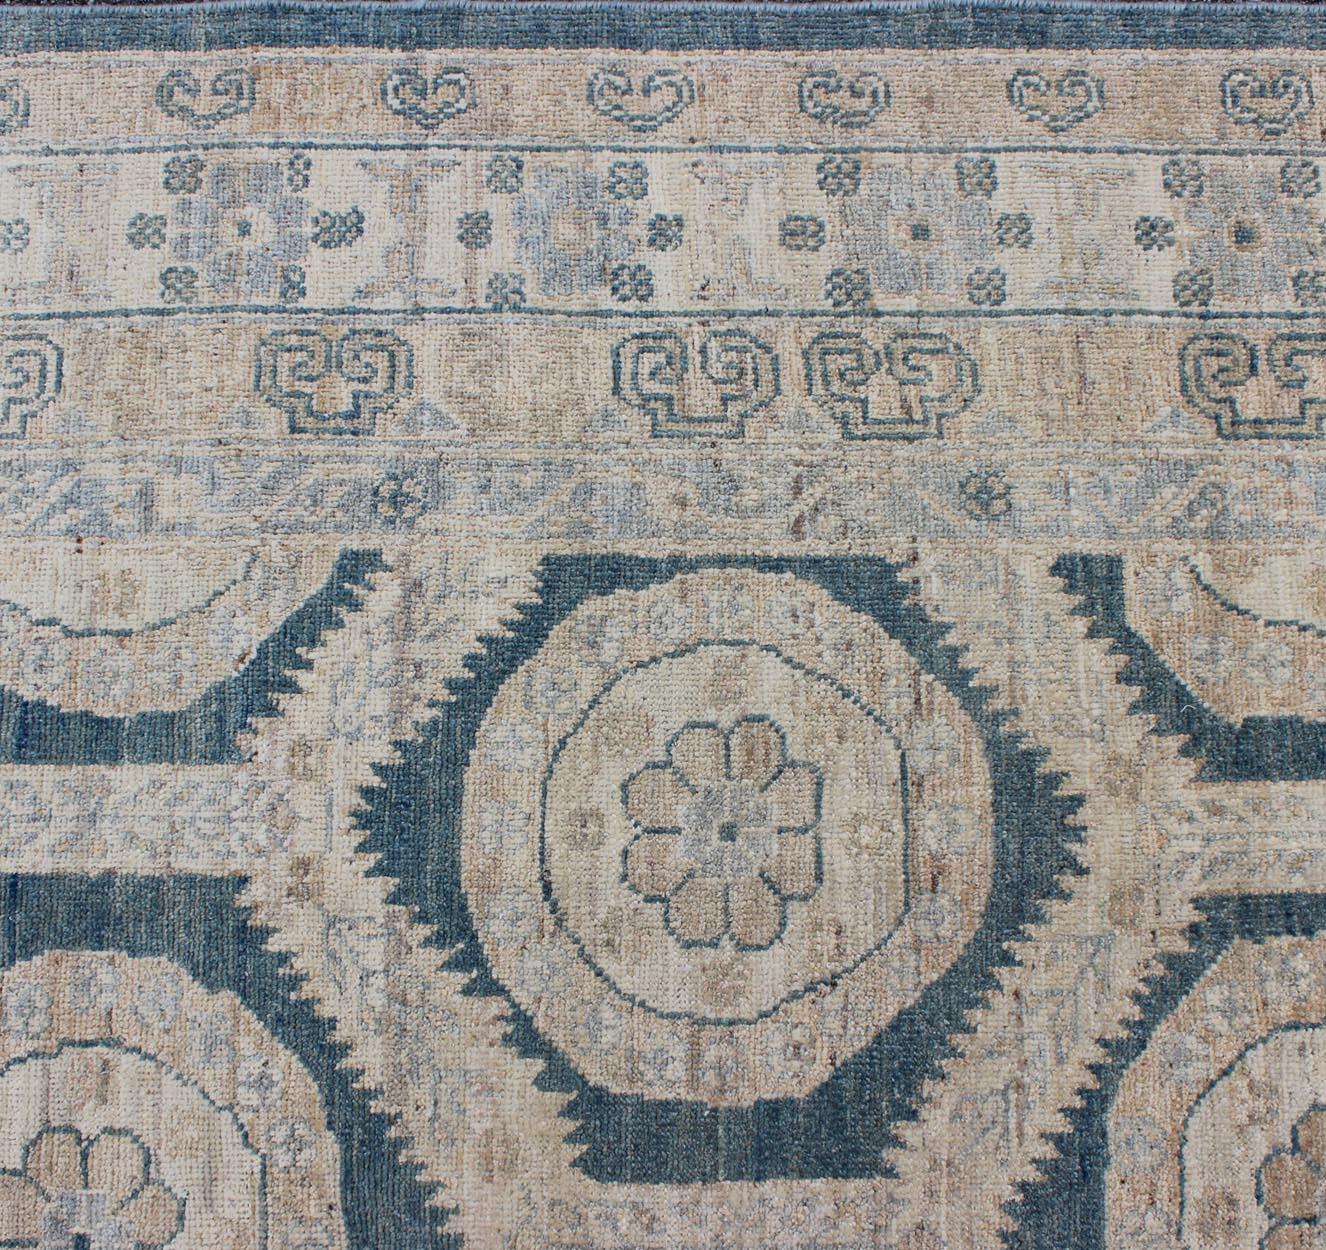 Khotan design rug with geometric medallions in tan, blue gray & teal blue. Khotan rug MP-1504-3391, country of origin / type: Afghanistan / Khotan.

Measures: 8'2 x 9'10.